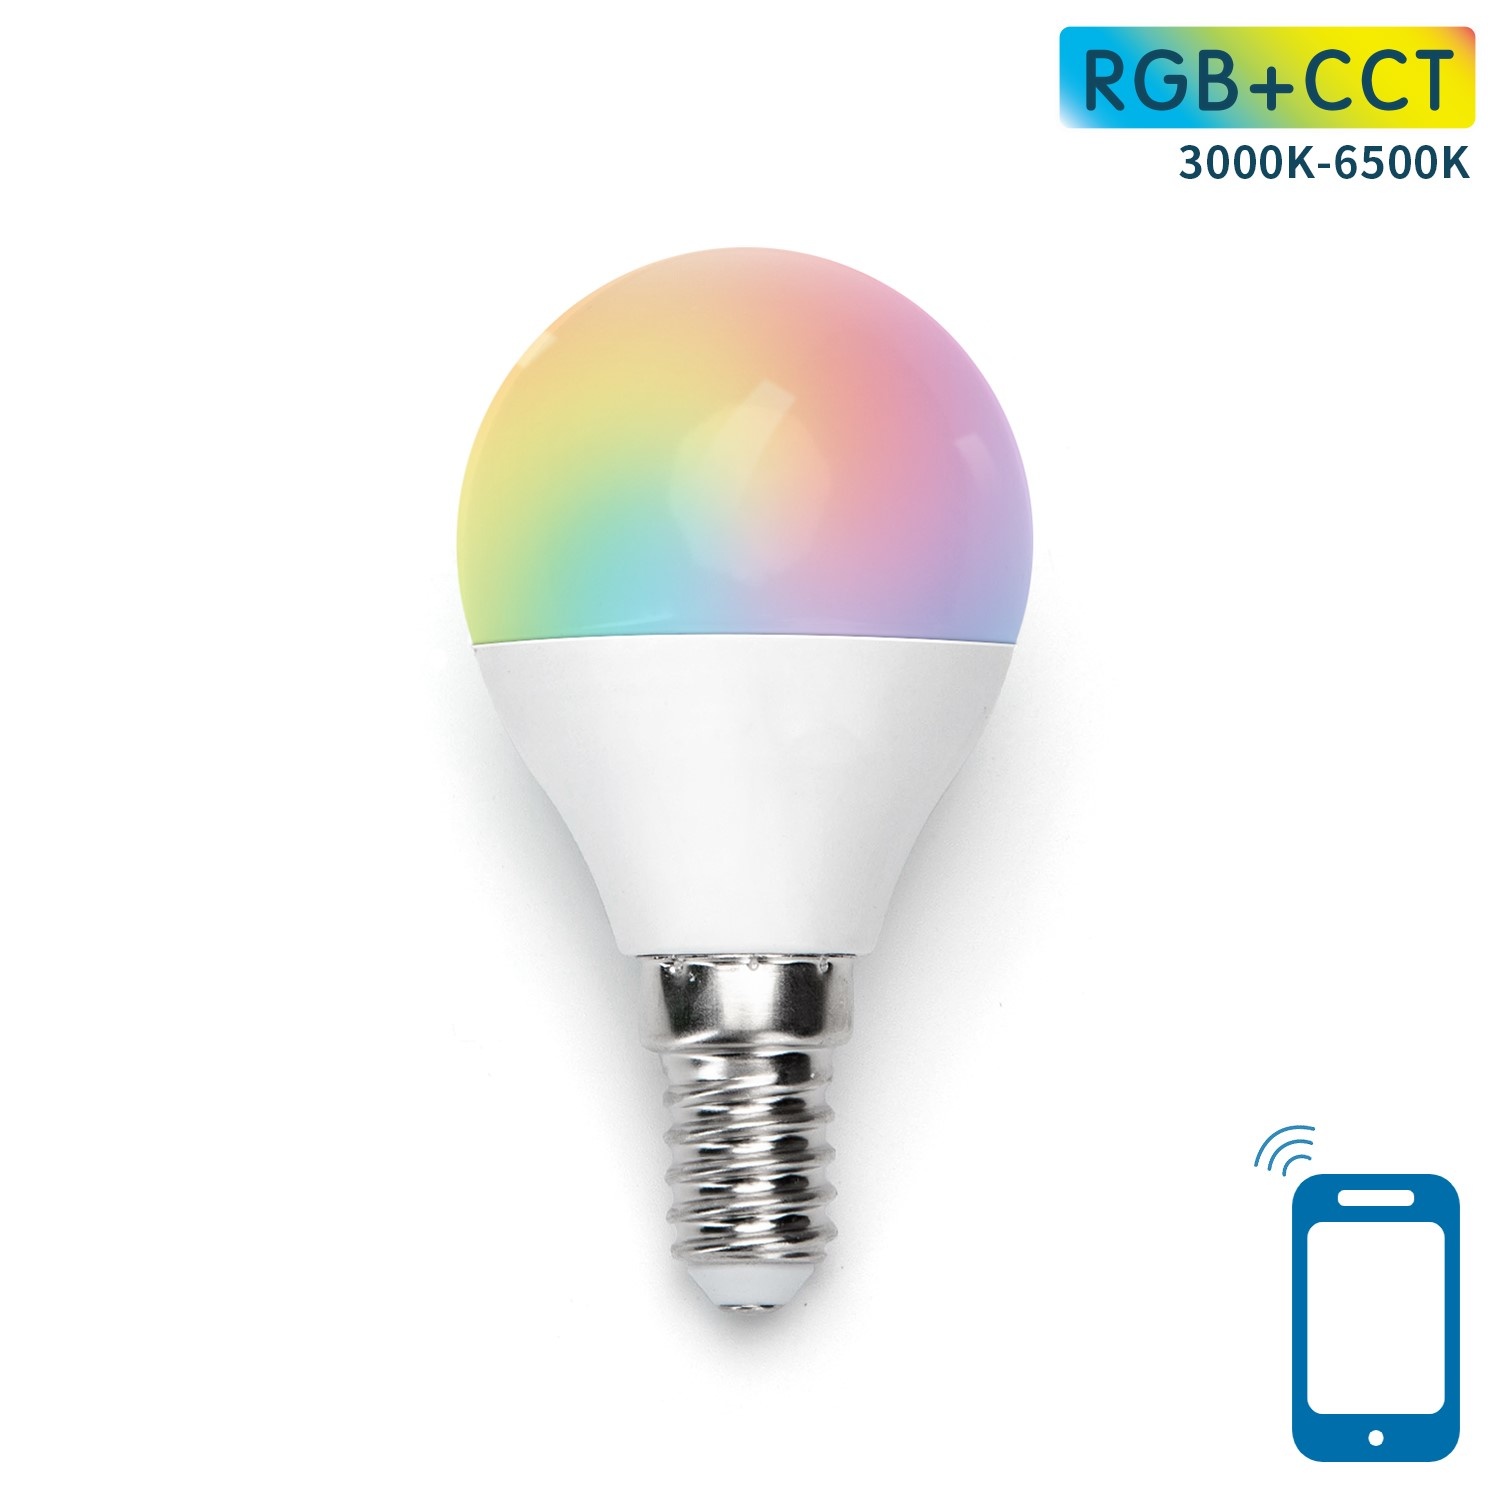 server krijgen Monument Kogellamp E14 WiFi RGB+CCT - LED 7W=42W gloeilamp